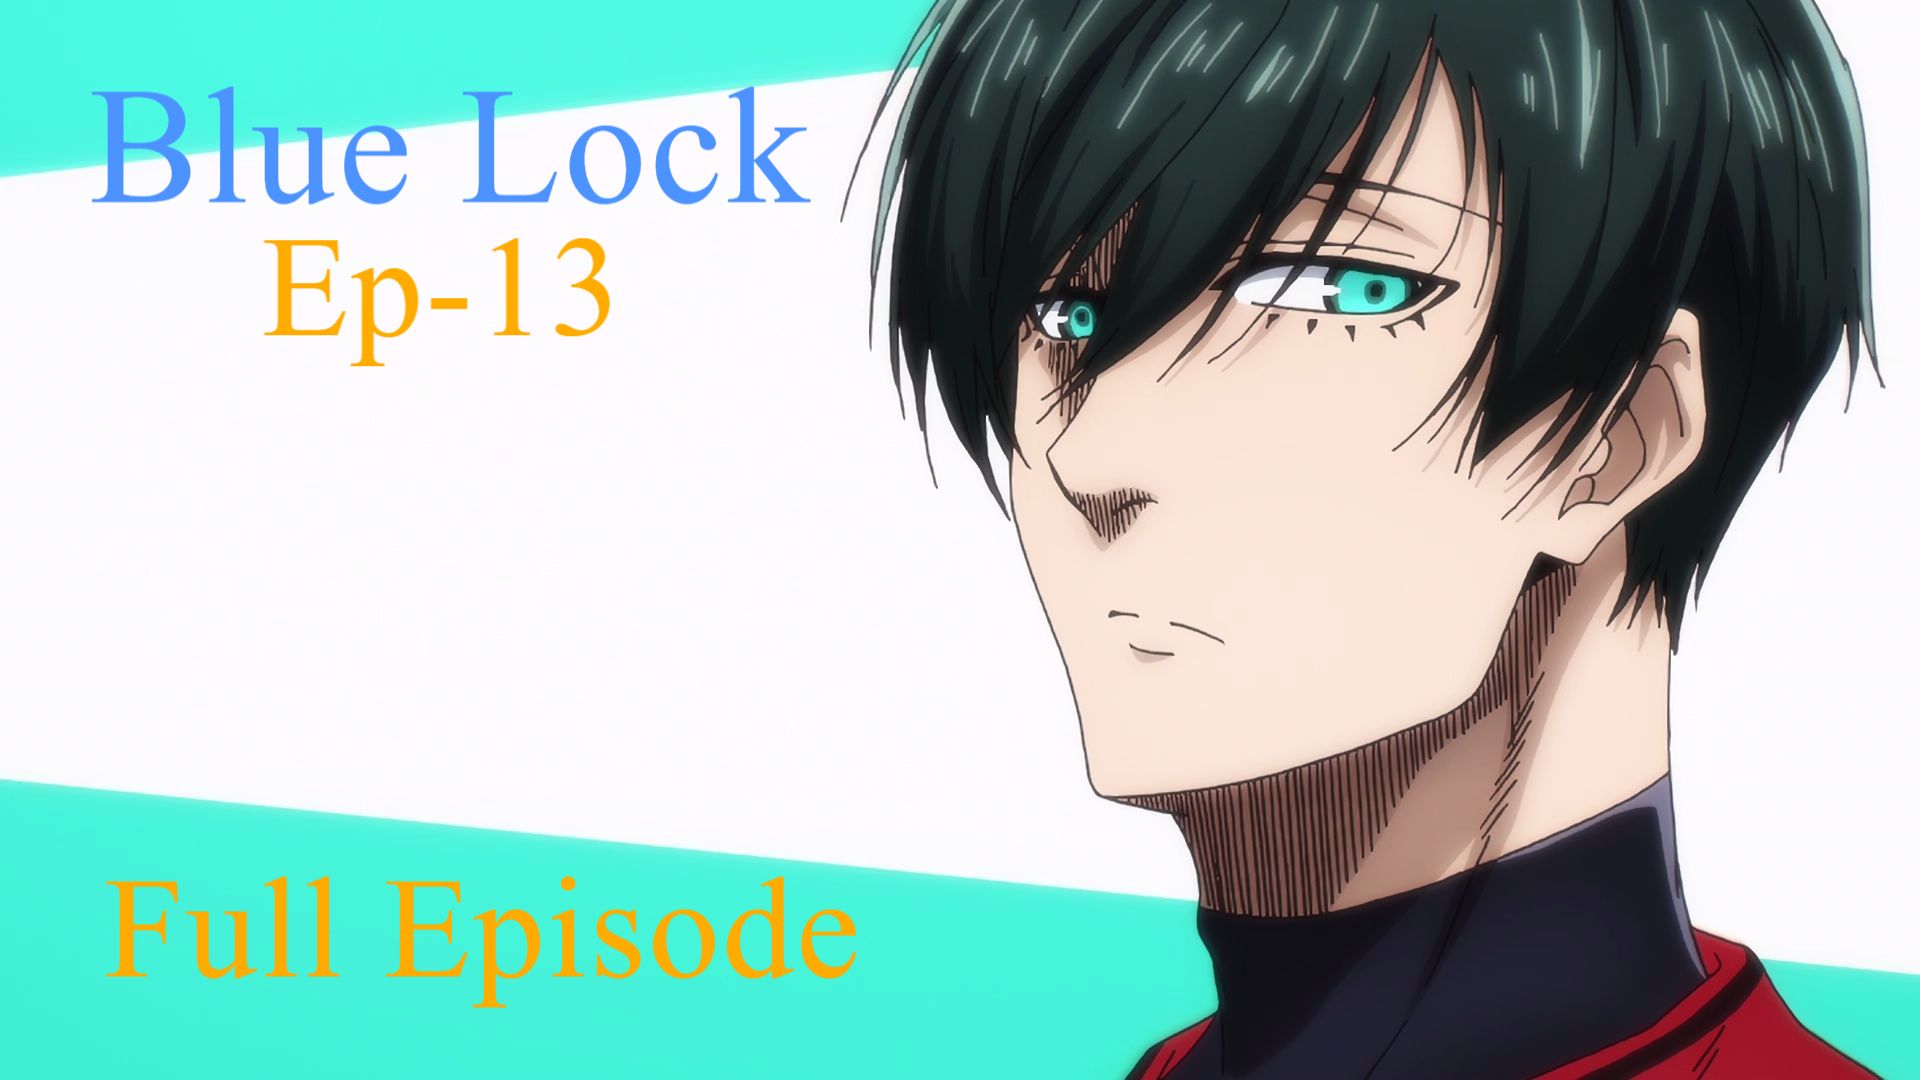 Blue Lock Episode 13 Release Date 